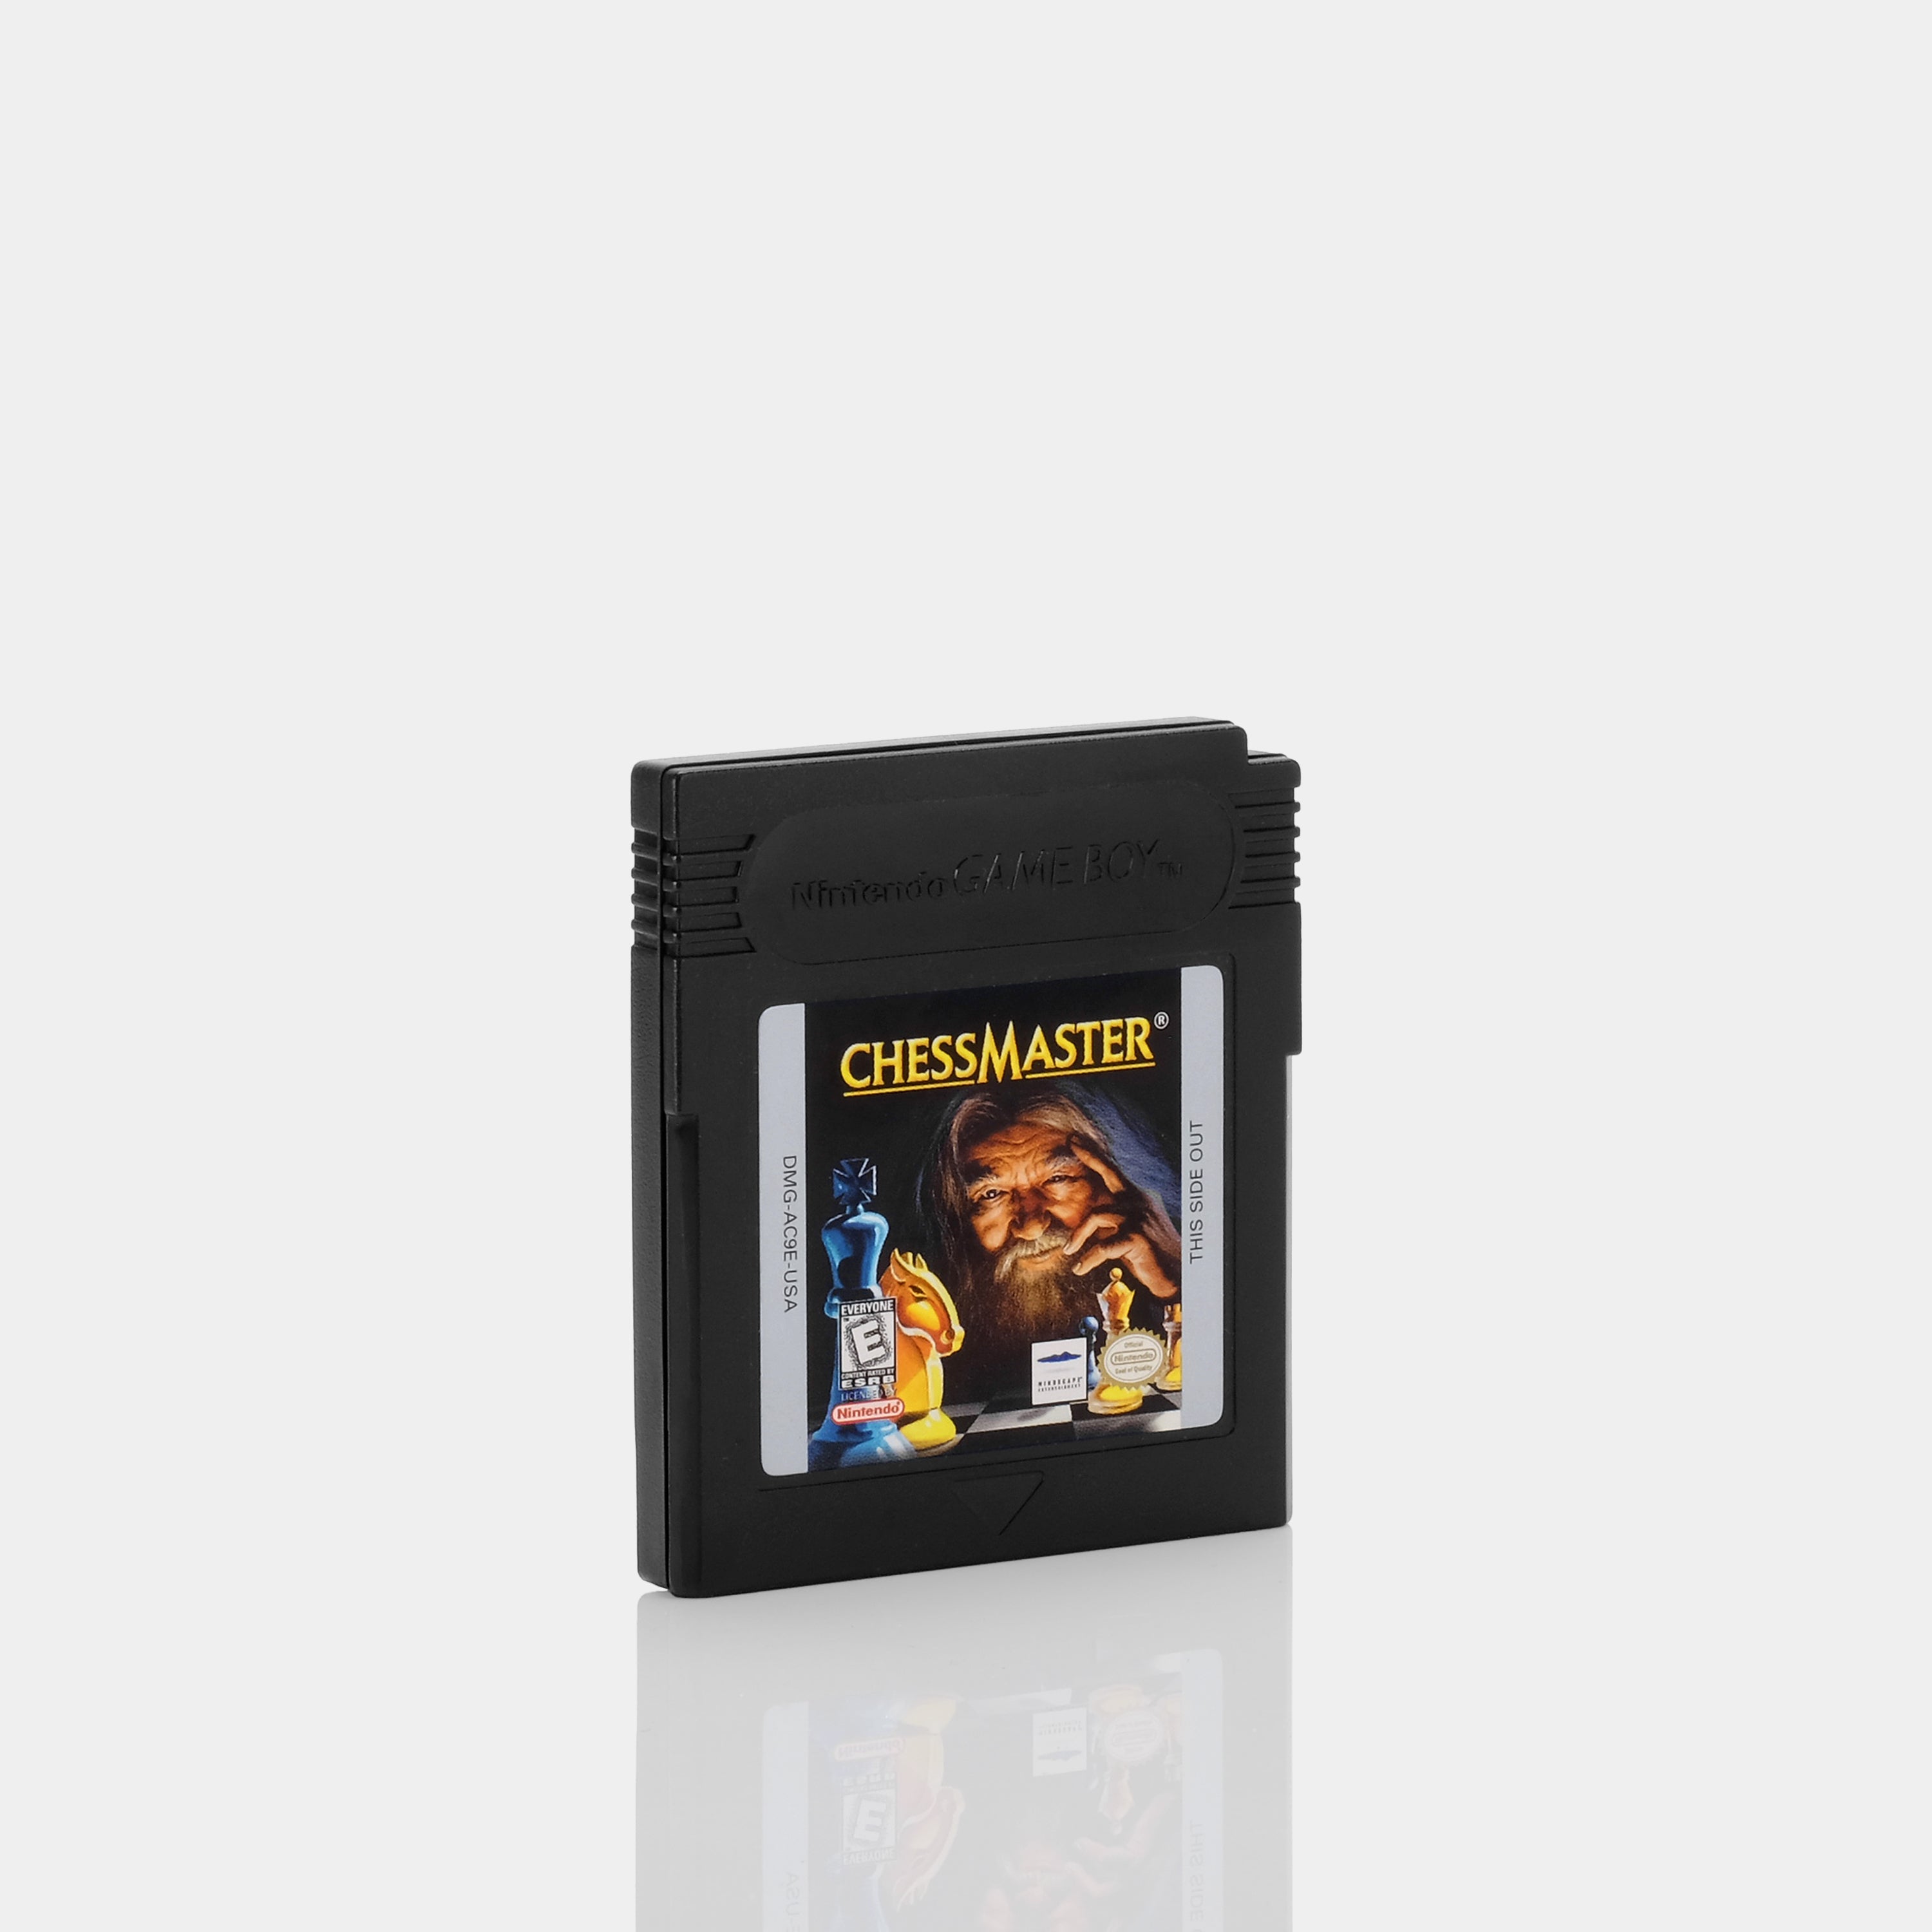 Chessmaster Game Boy Color Game